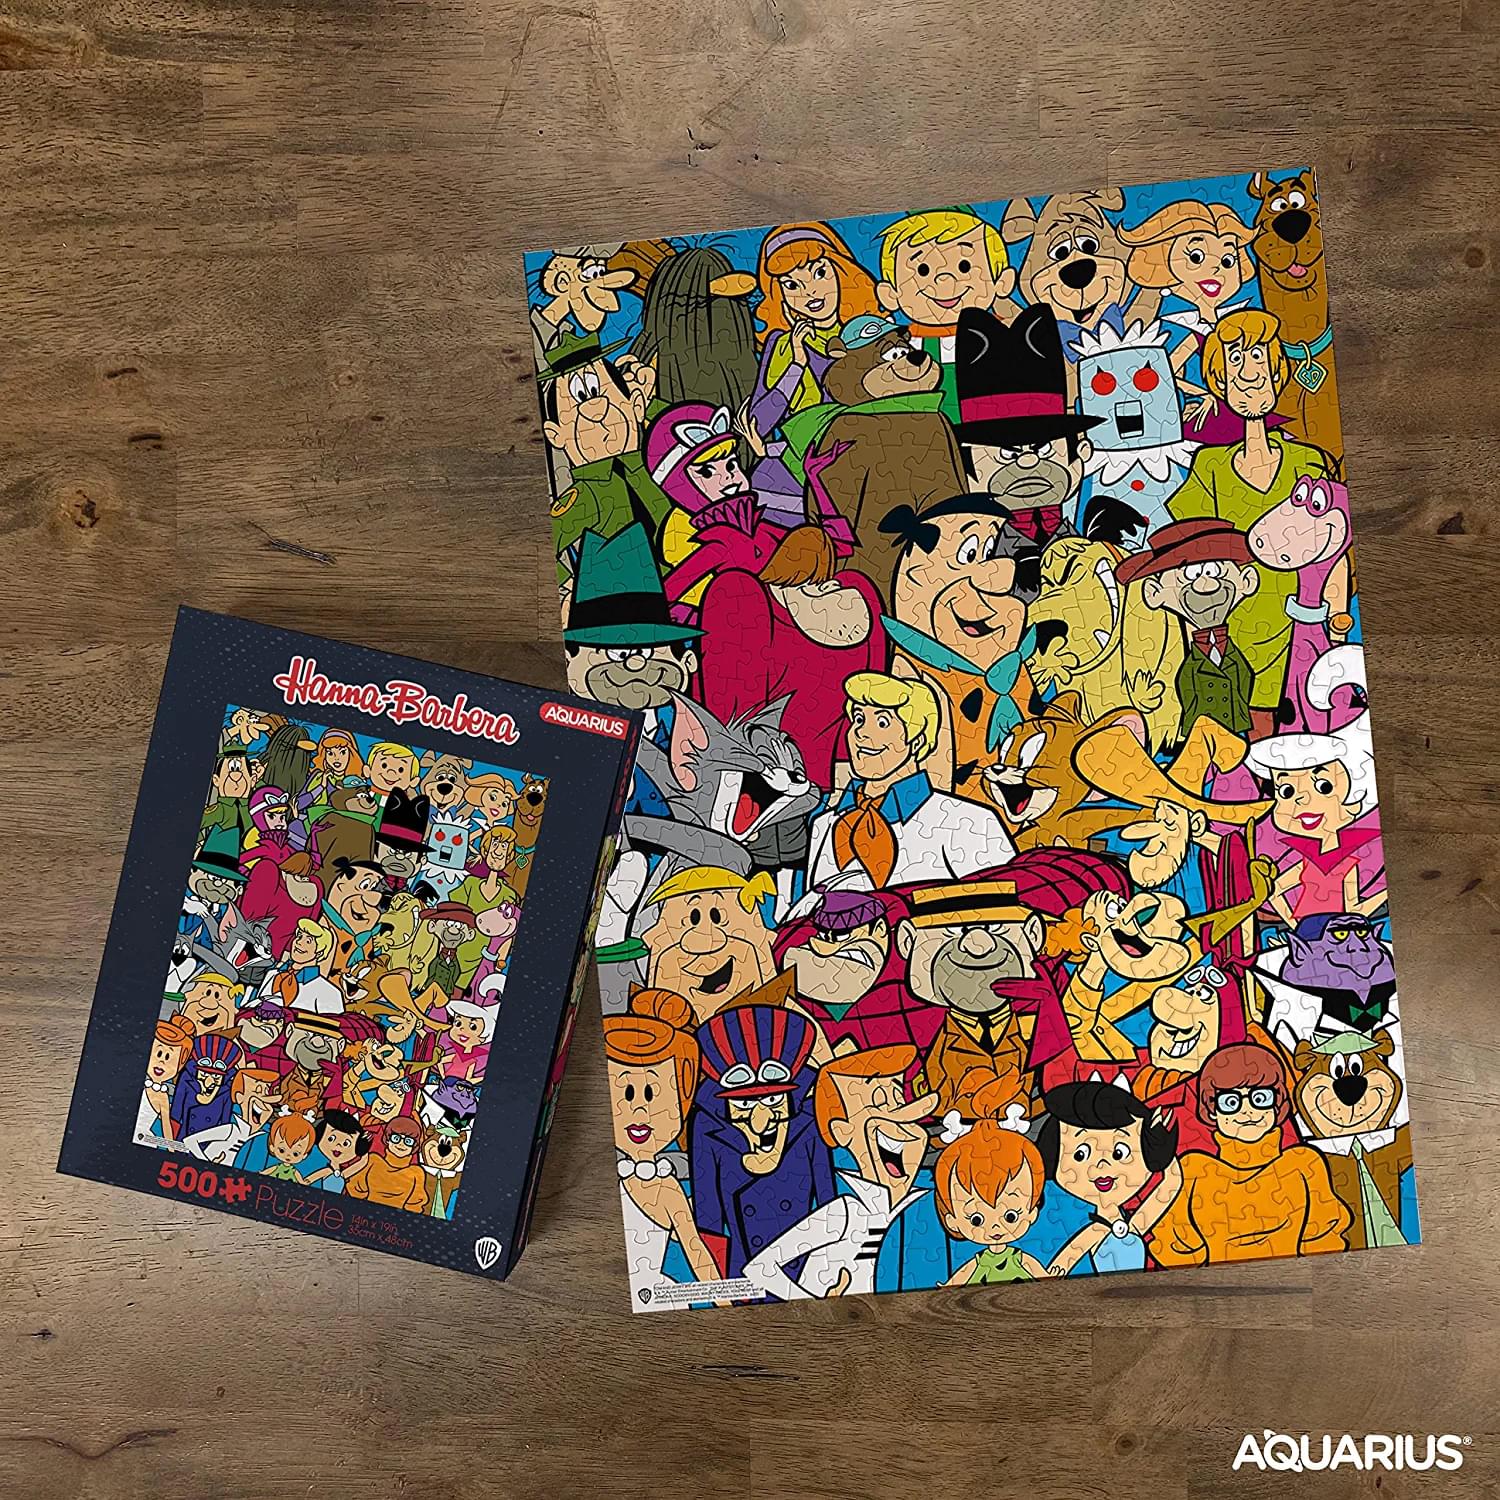 Hanna Barbera Cast 500 Piece Jigsaw Puzzle